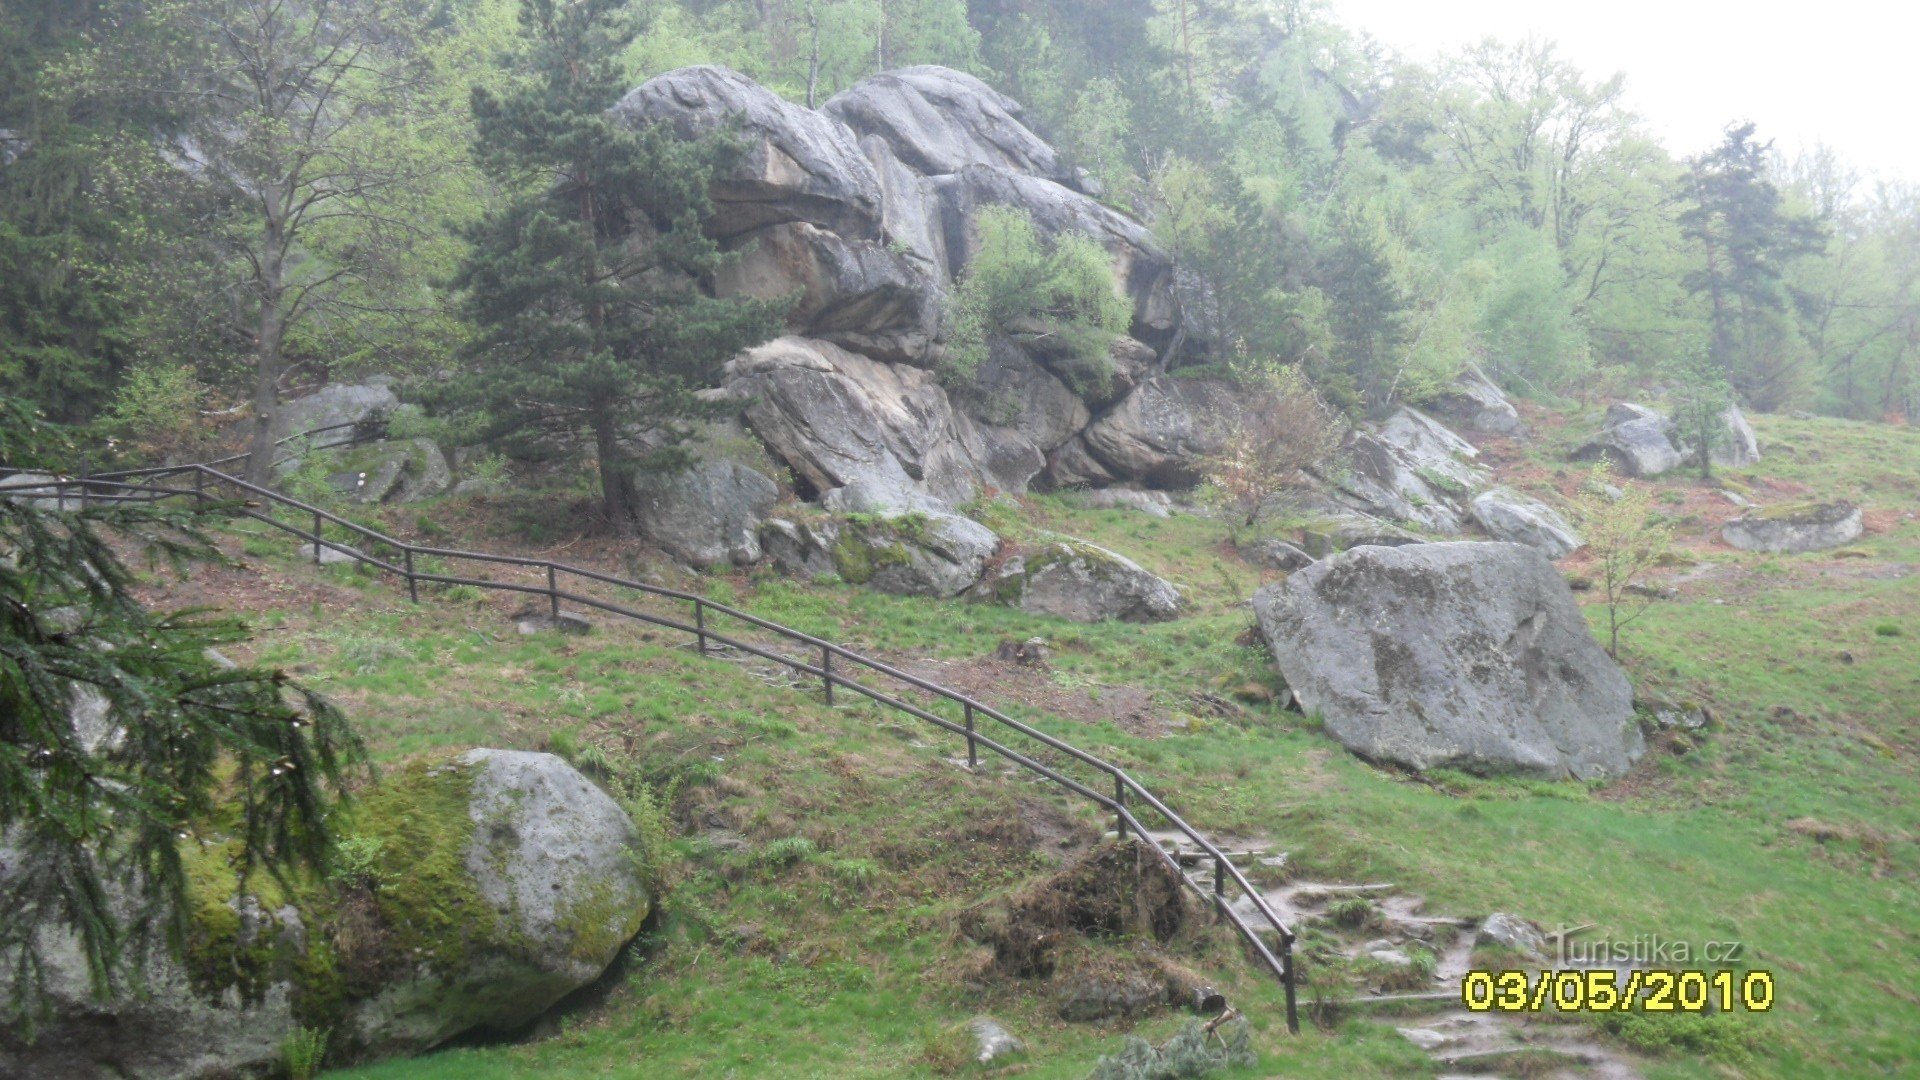 Subida às rochas de Pulčín